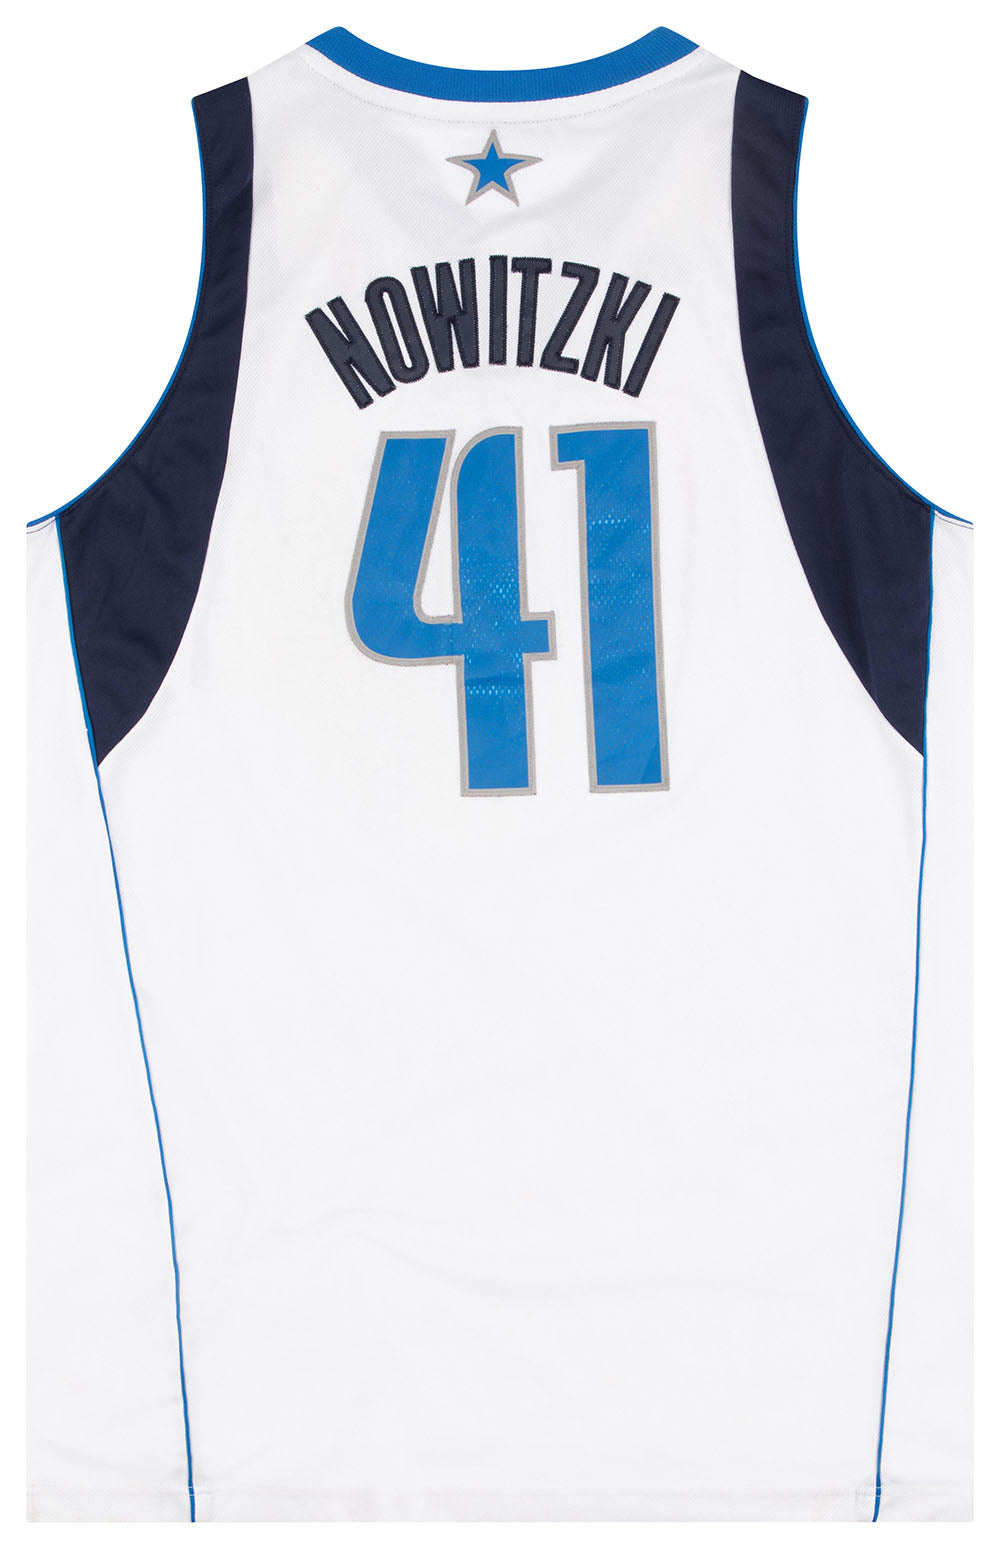 Dirk Nowitzki Throwback Dallas Mavericks Jerseys